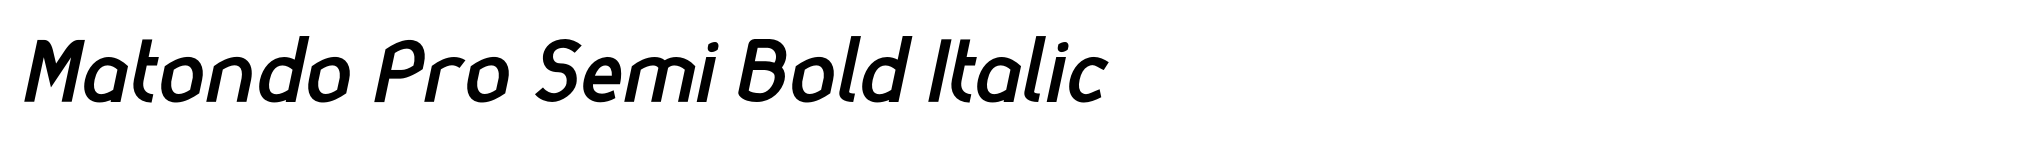 Matondo Pro Semi Bold Italic image